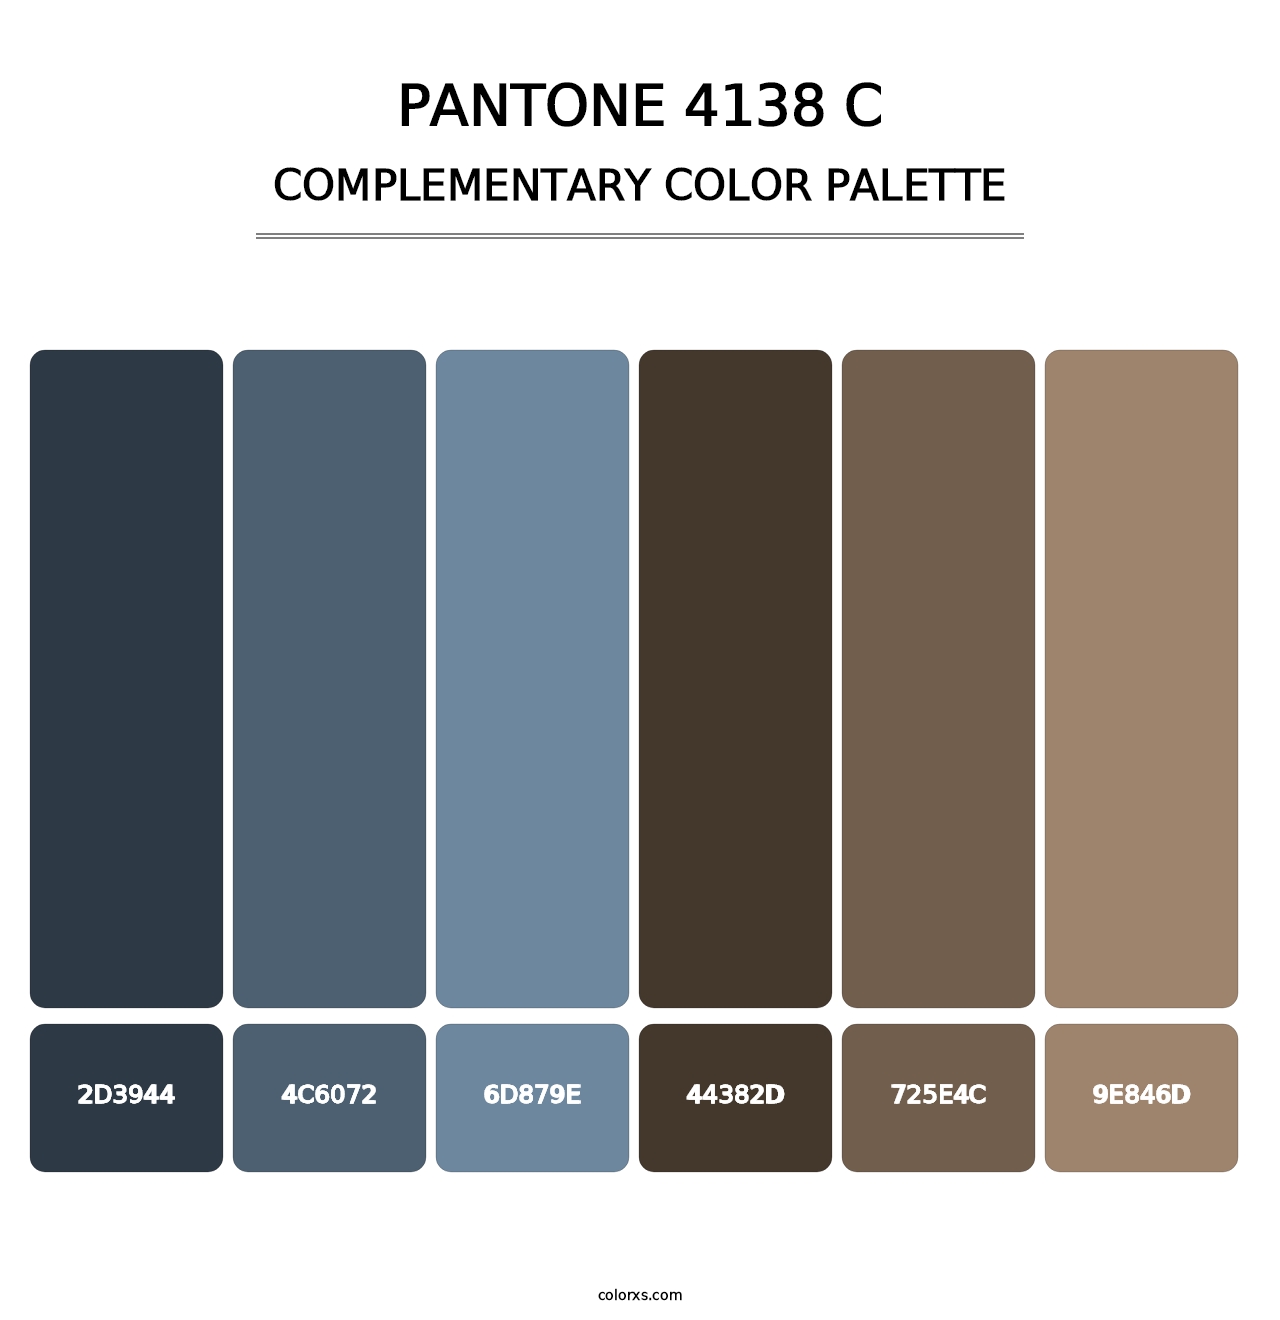 PANTONE 4138 C - Complementary Color Palette